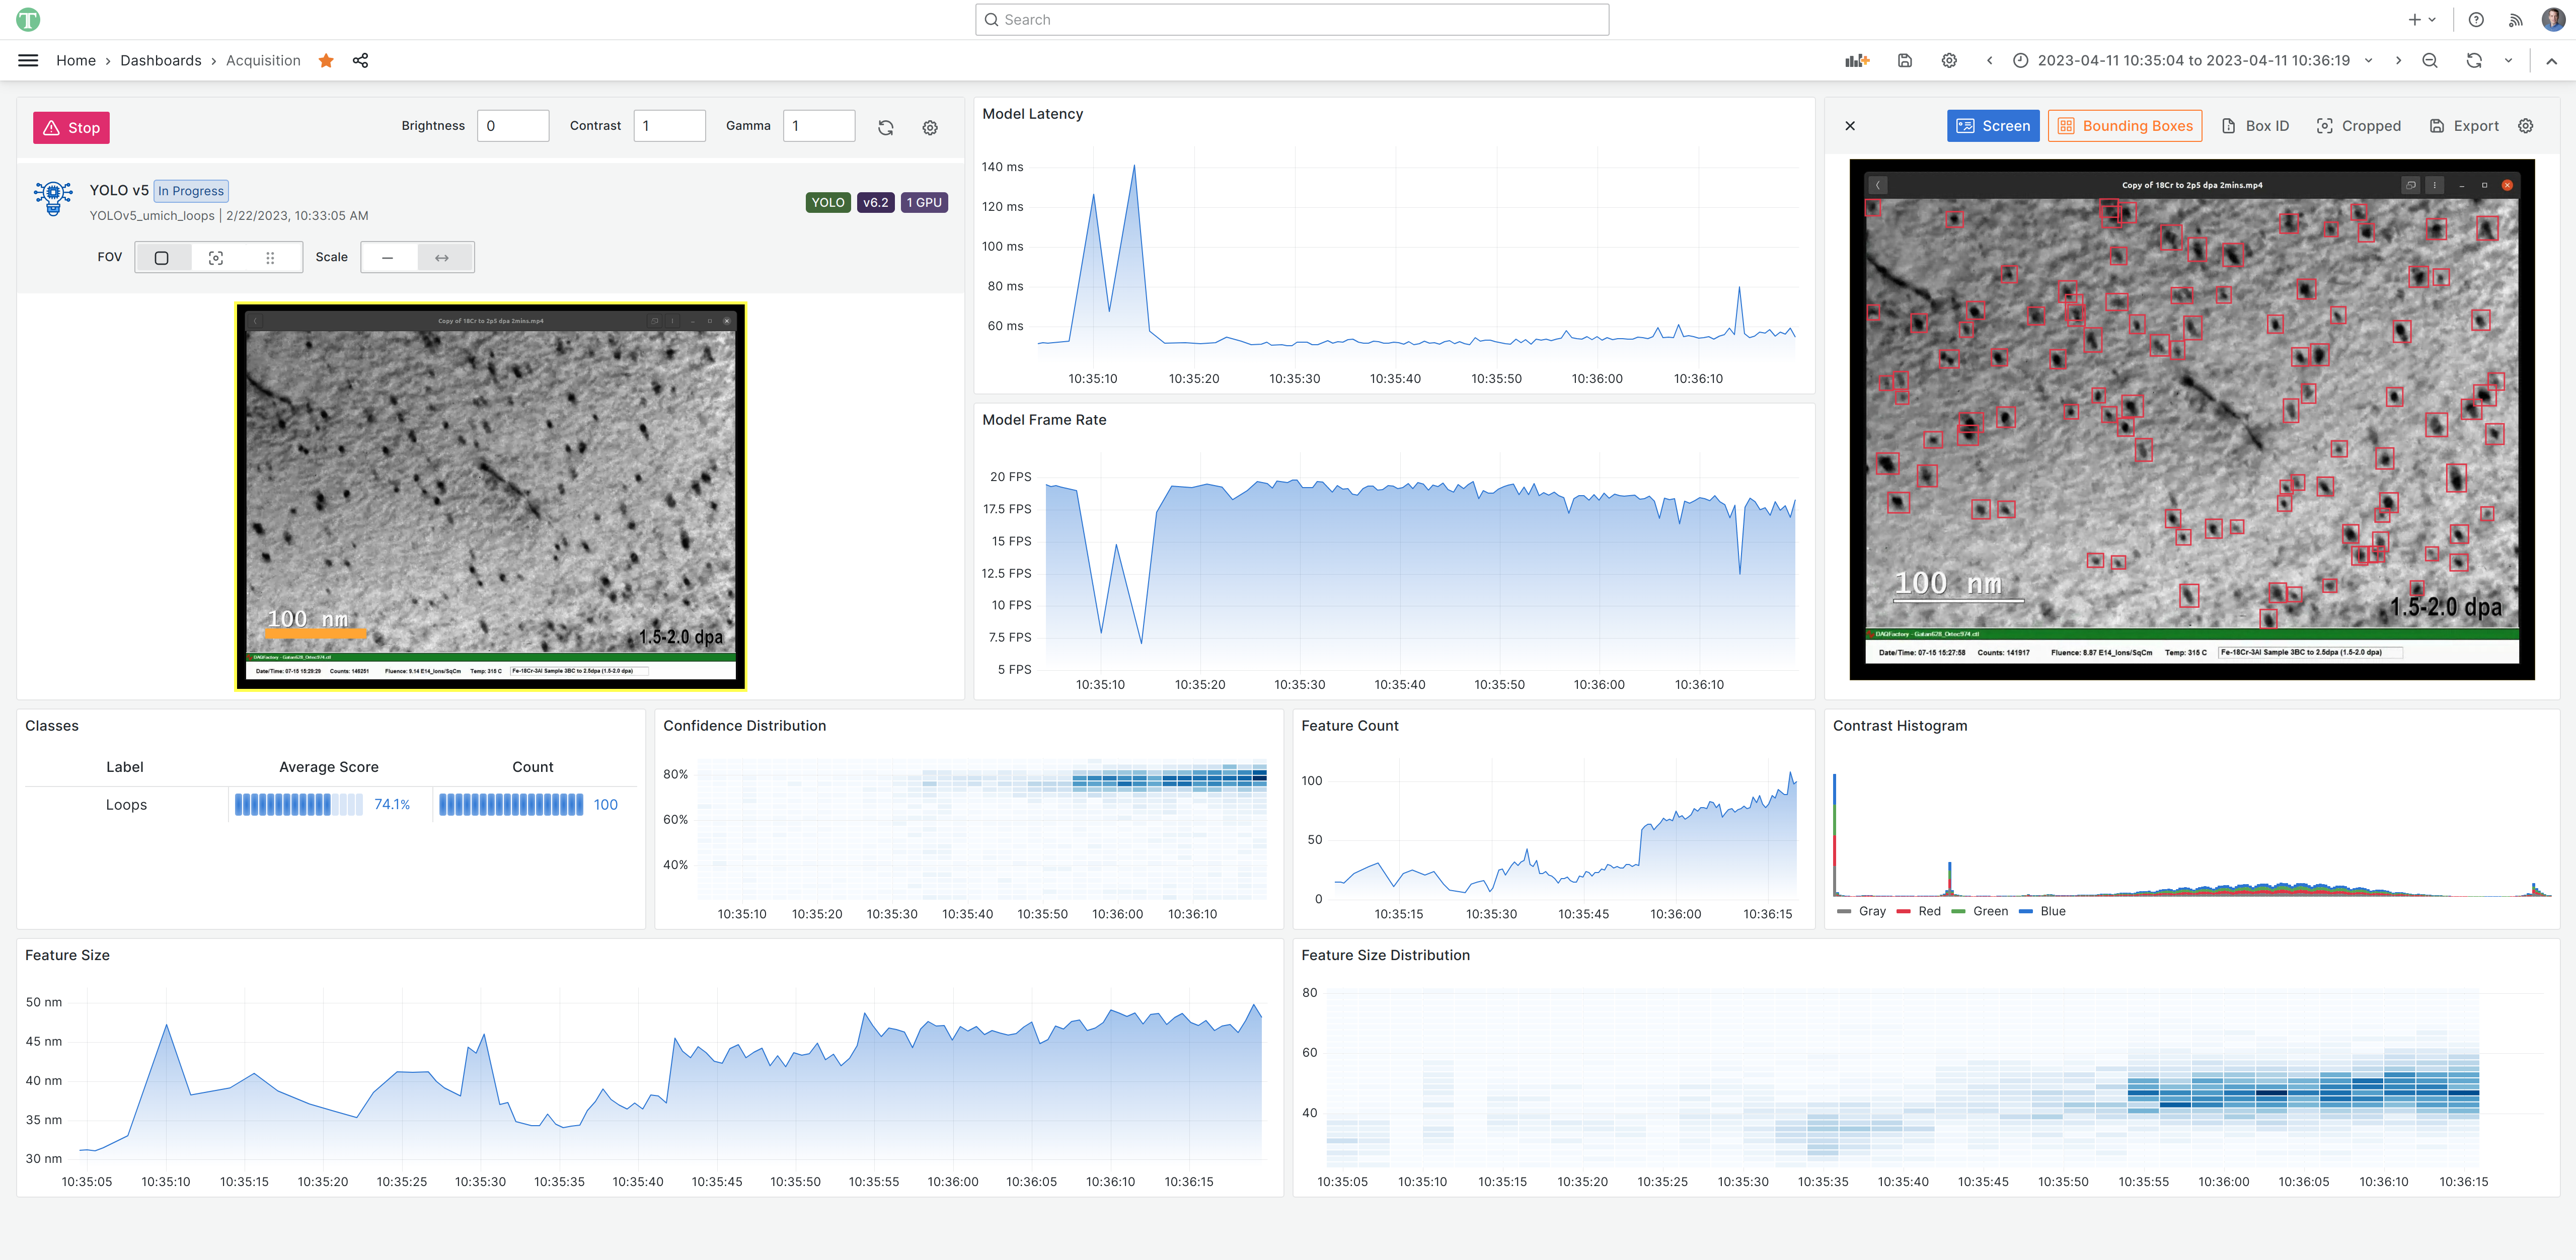 A screenshot of the AI image analysis performance dashboard.